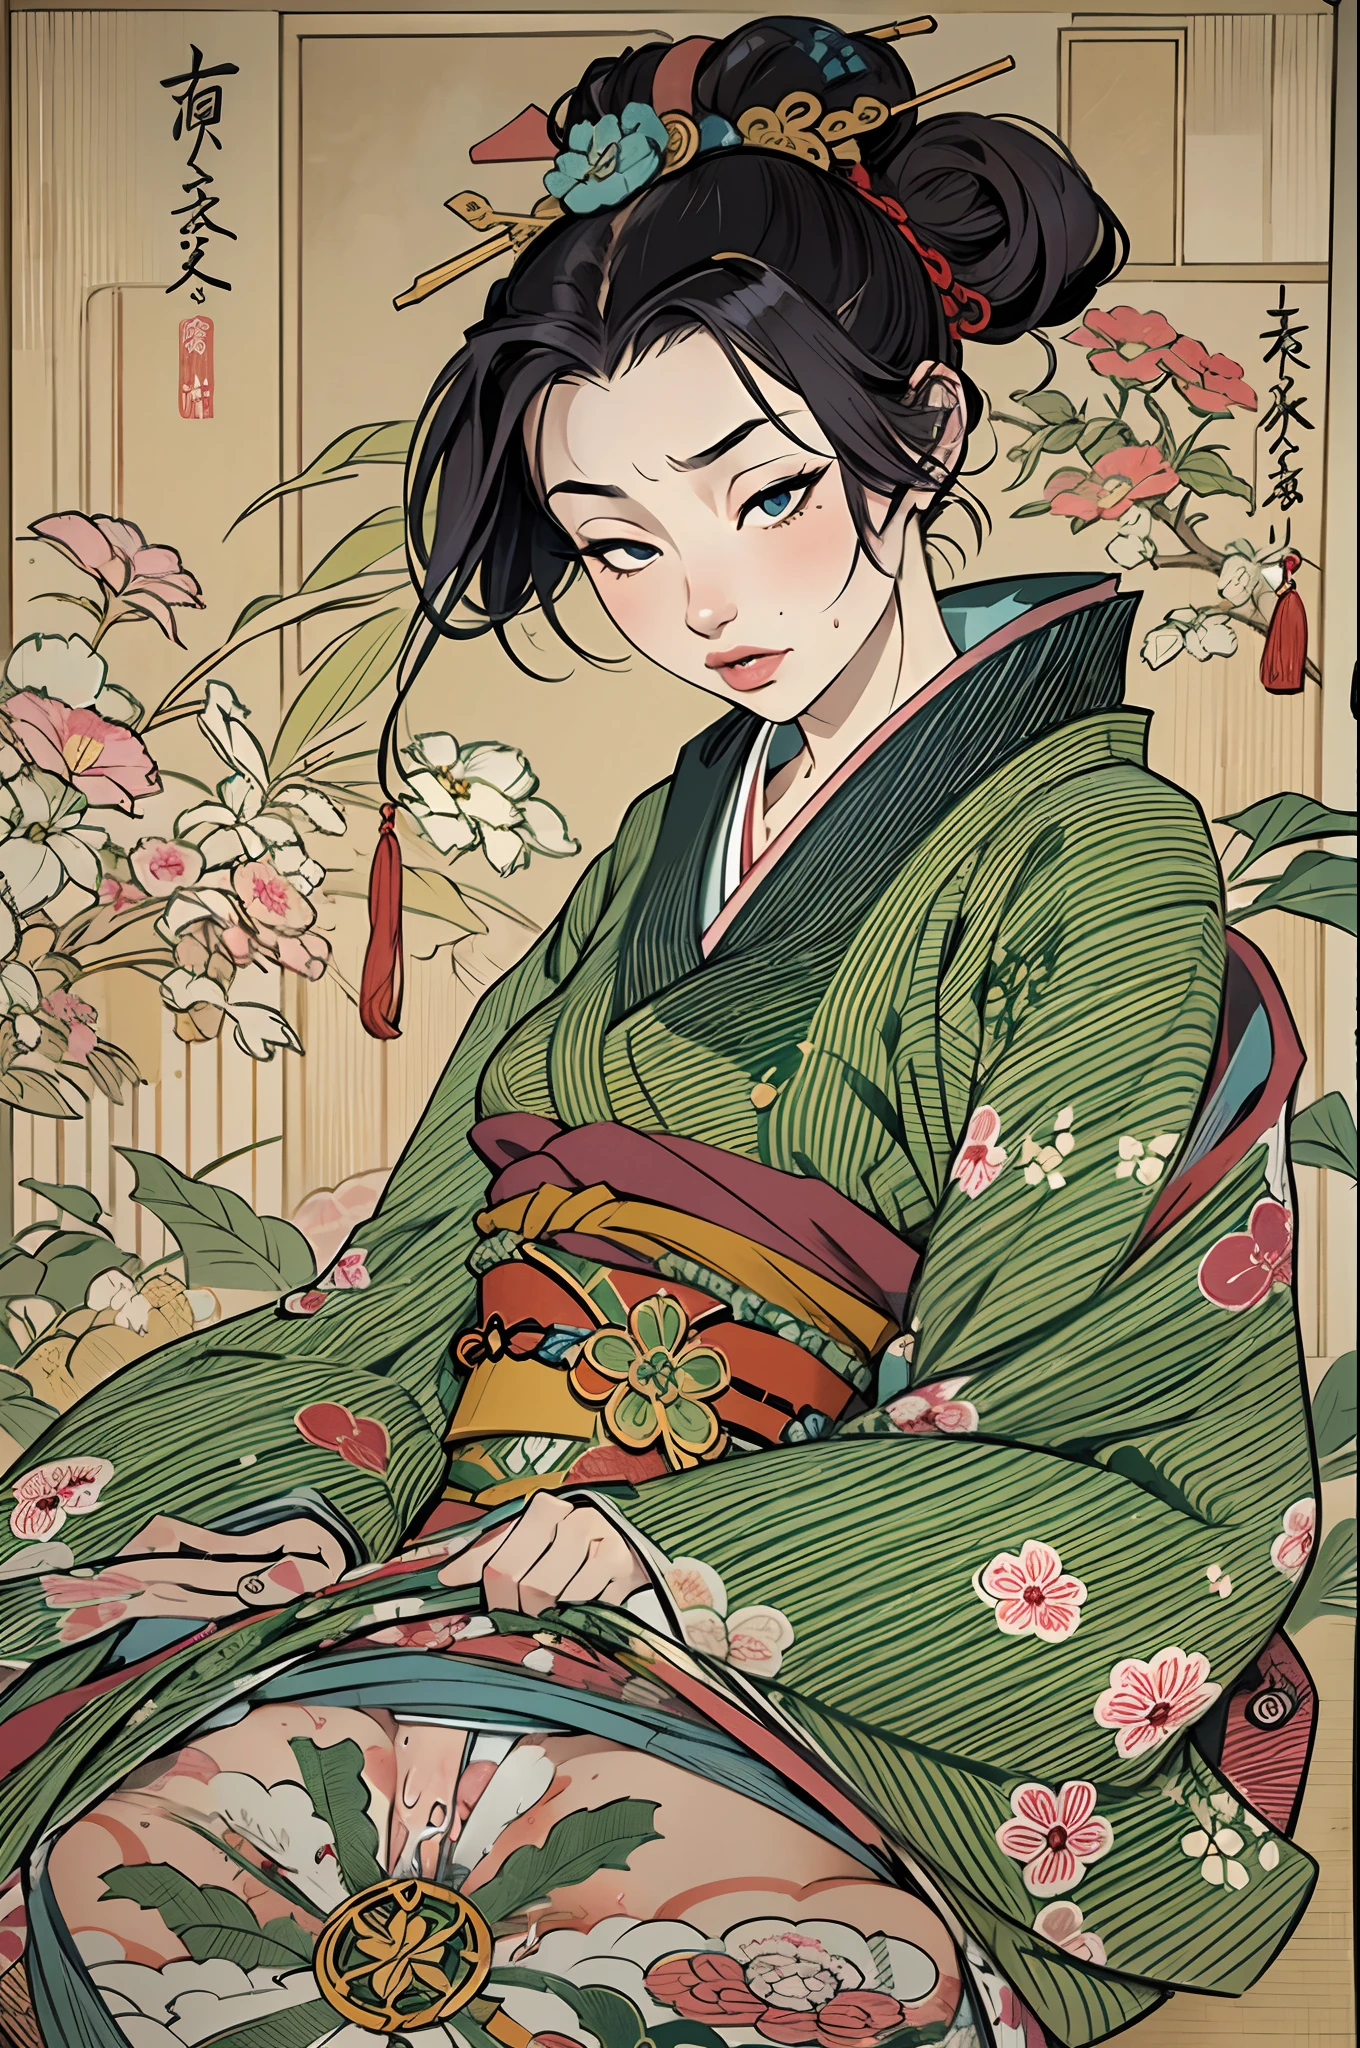 ((NSFW)),Sharaku,여자의 초상화,그녀의 가슴이 보인다.,이미지 중앙에 위치합니다, 사진 전체에 일본식 효과와 장식이 흩어져 있습니다.